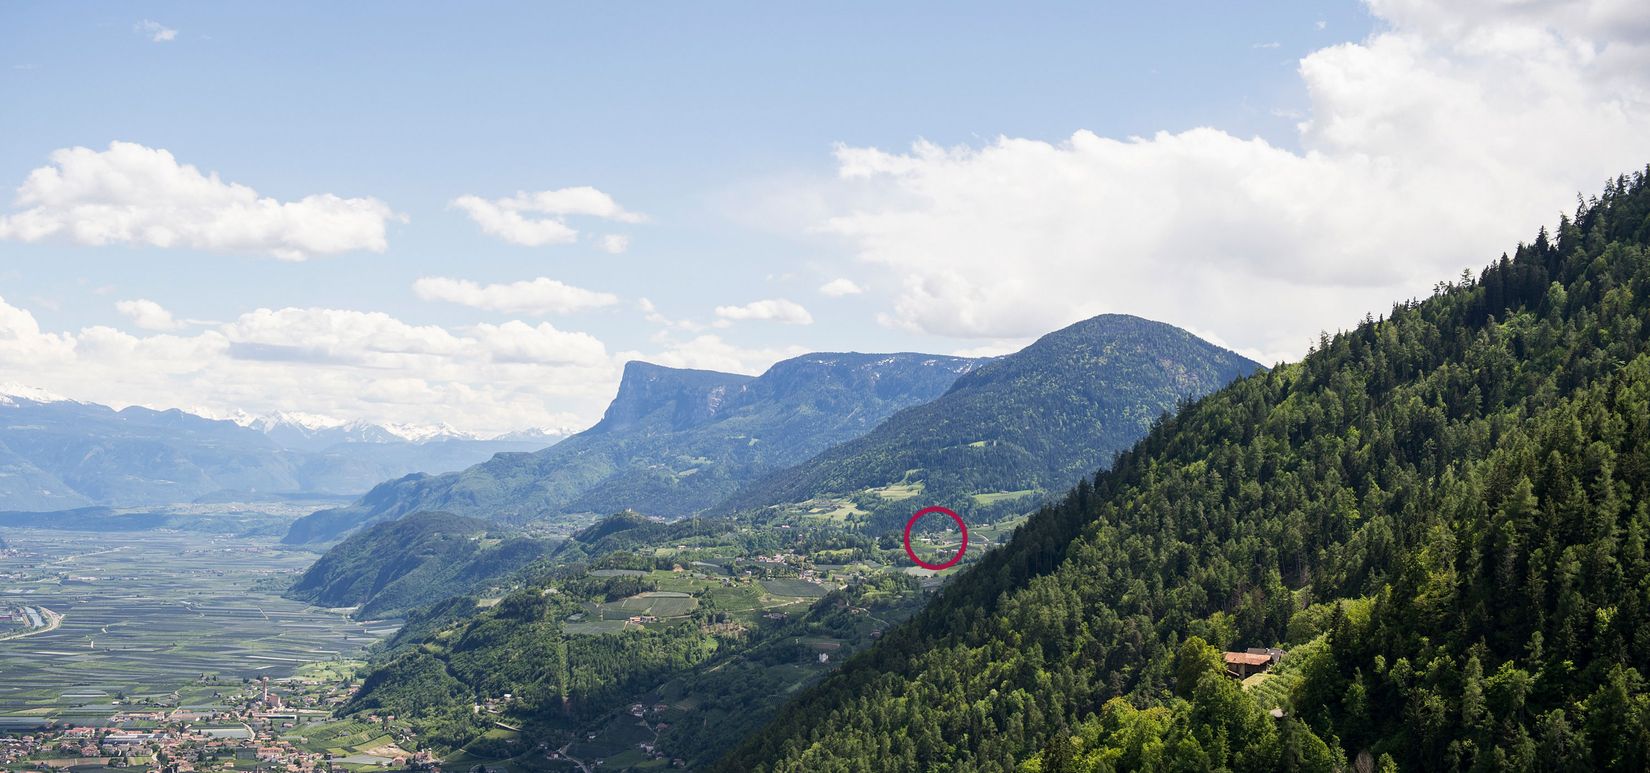 Foiana-Lana in South Tyrol